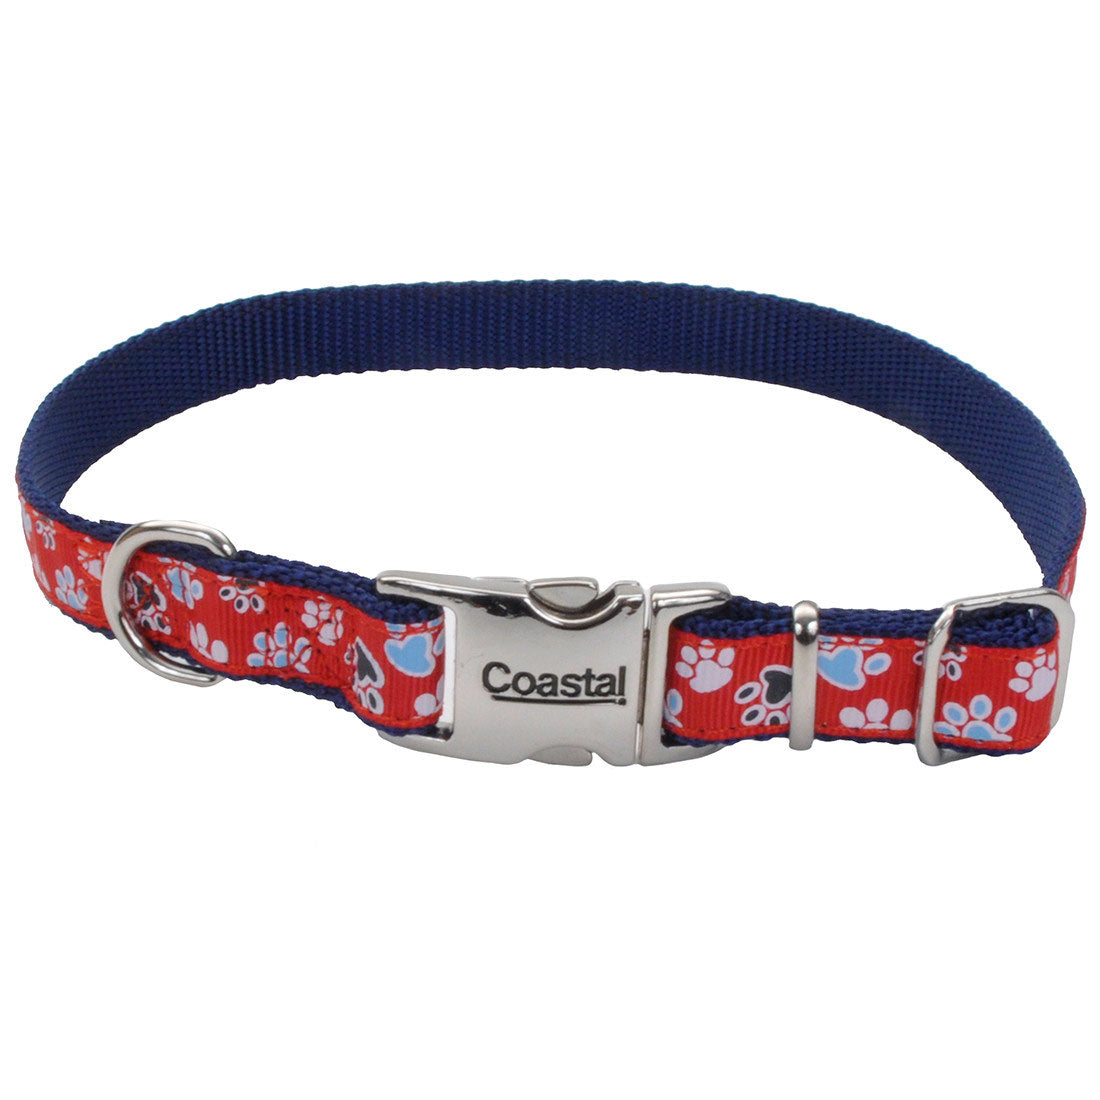 Coastal Ribbon Adjustable Dog Collar with Metal Clip Pink Flamingo S/M